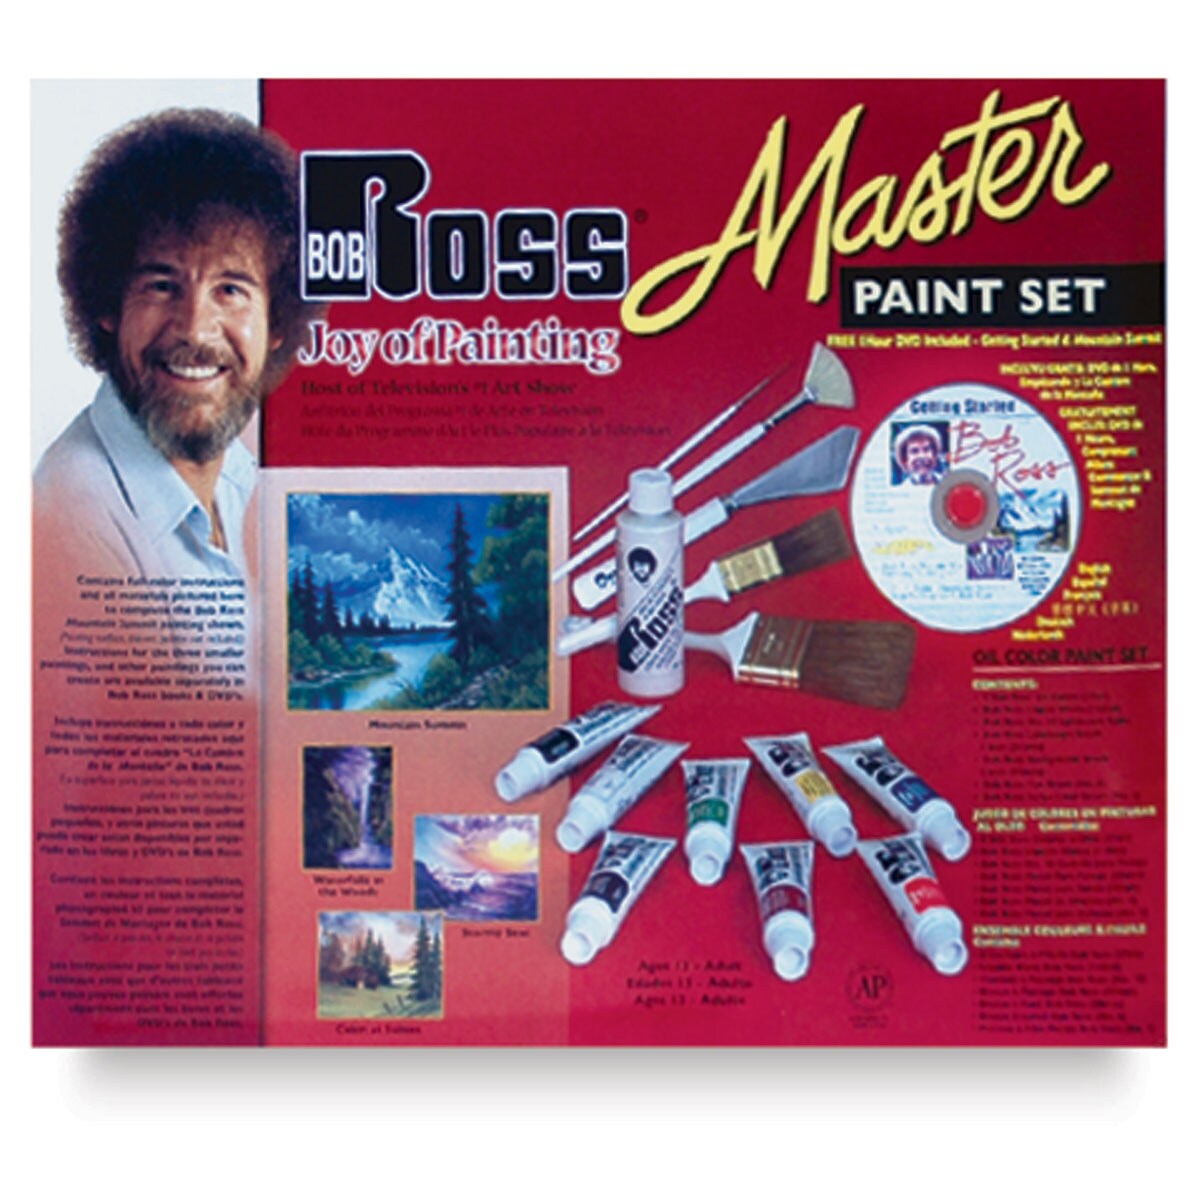 Bob Ross Master Paint Set 